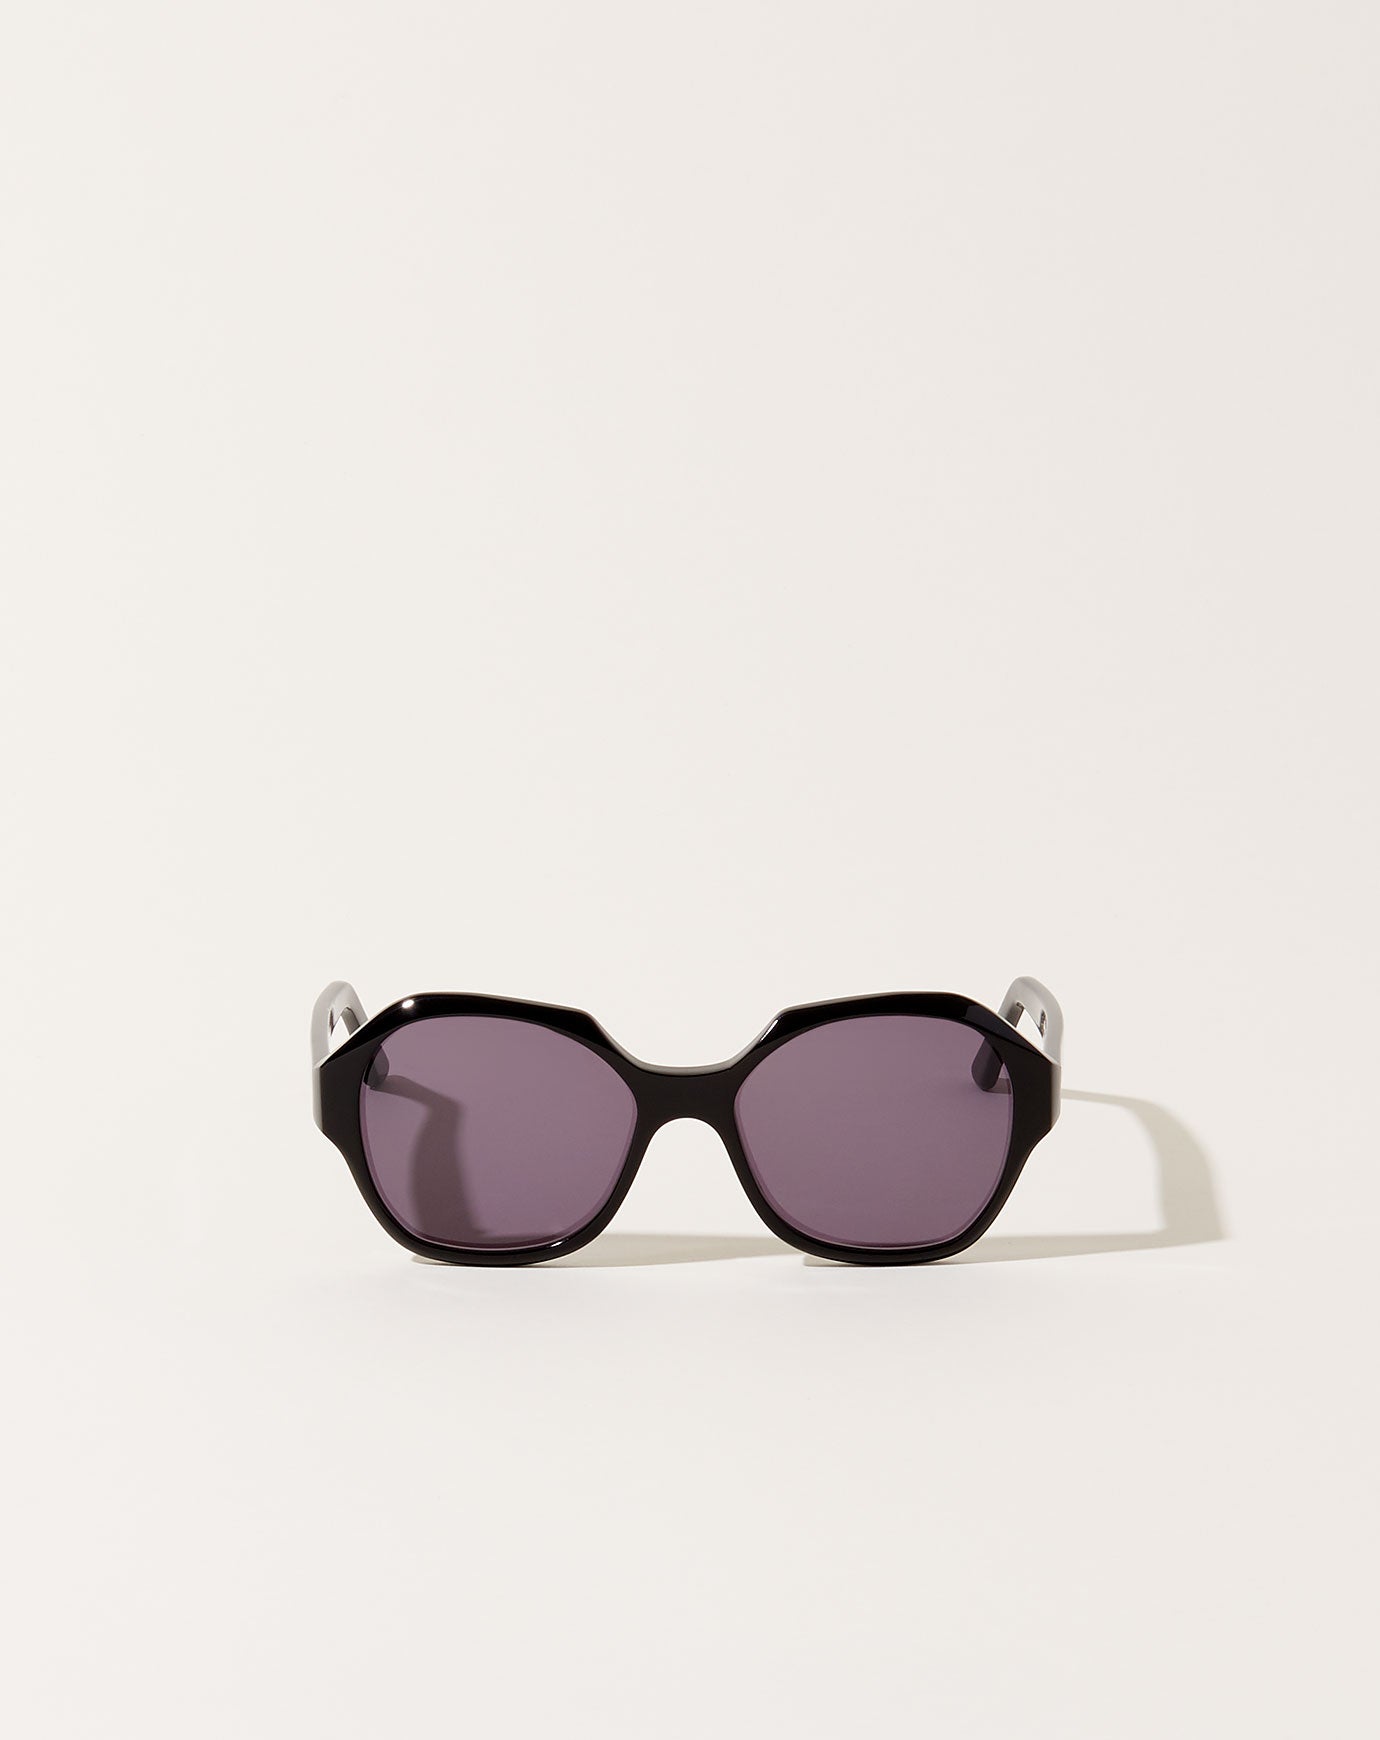 Eva Masaki 001 Sunglasses in Nox